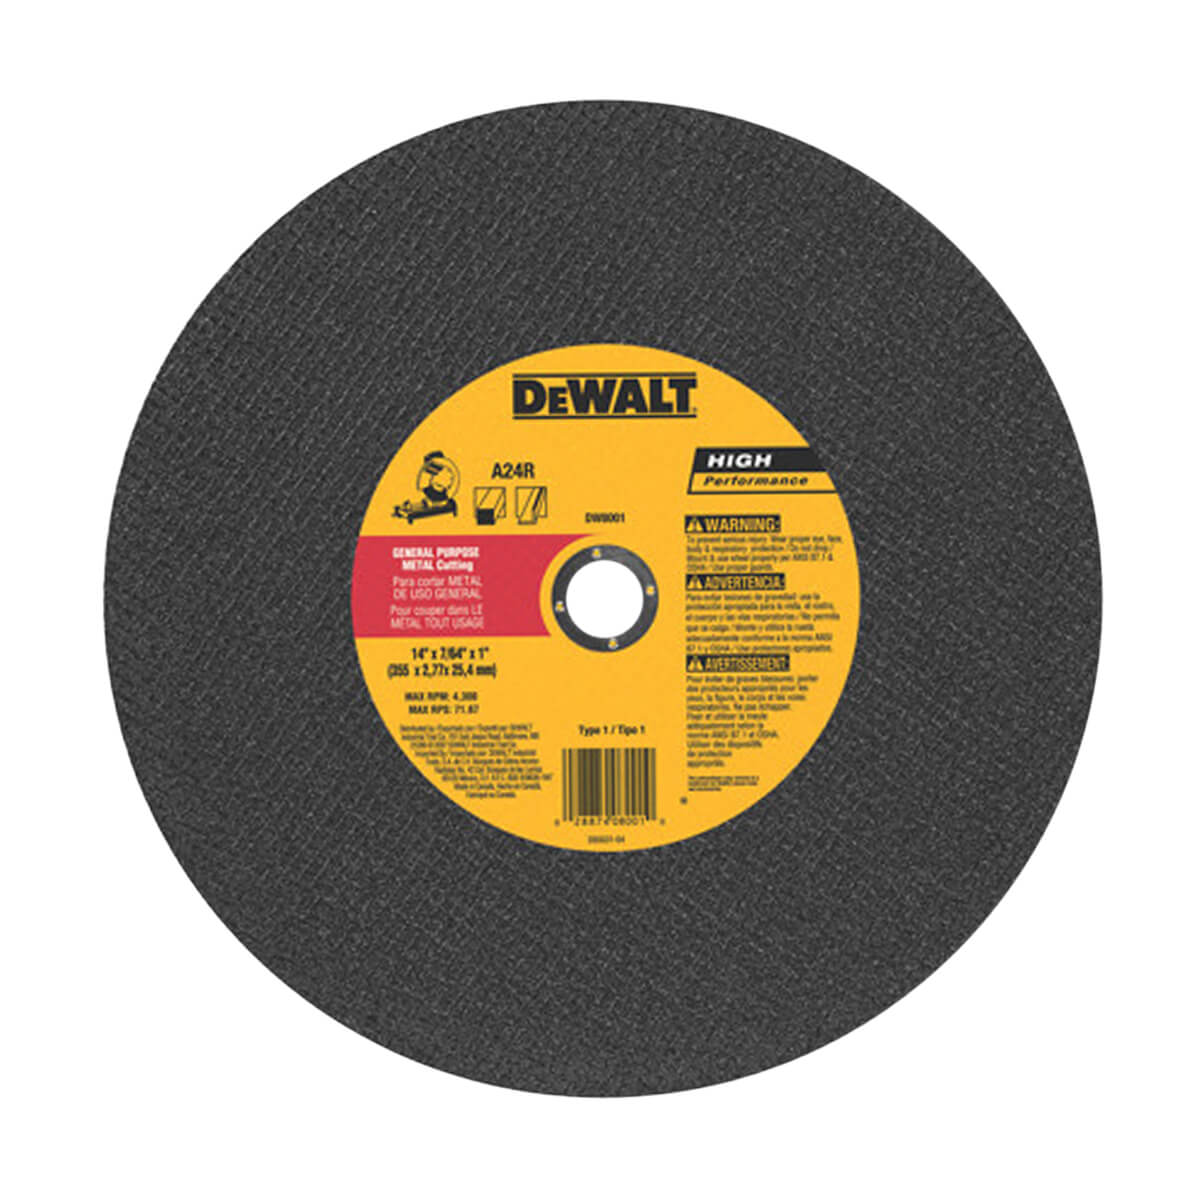 DEWALT DW8001 14-in x 3/32-in General Purpose Chop Saw Wheel